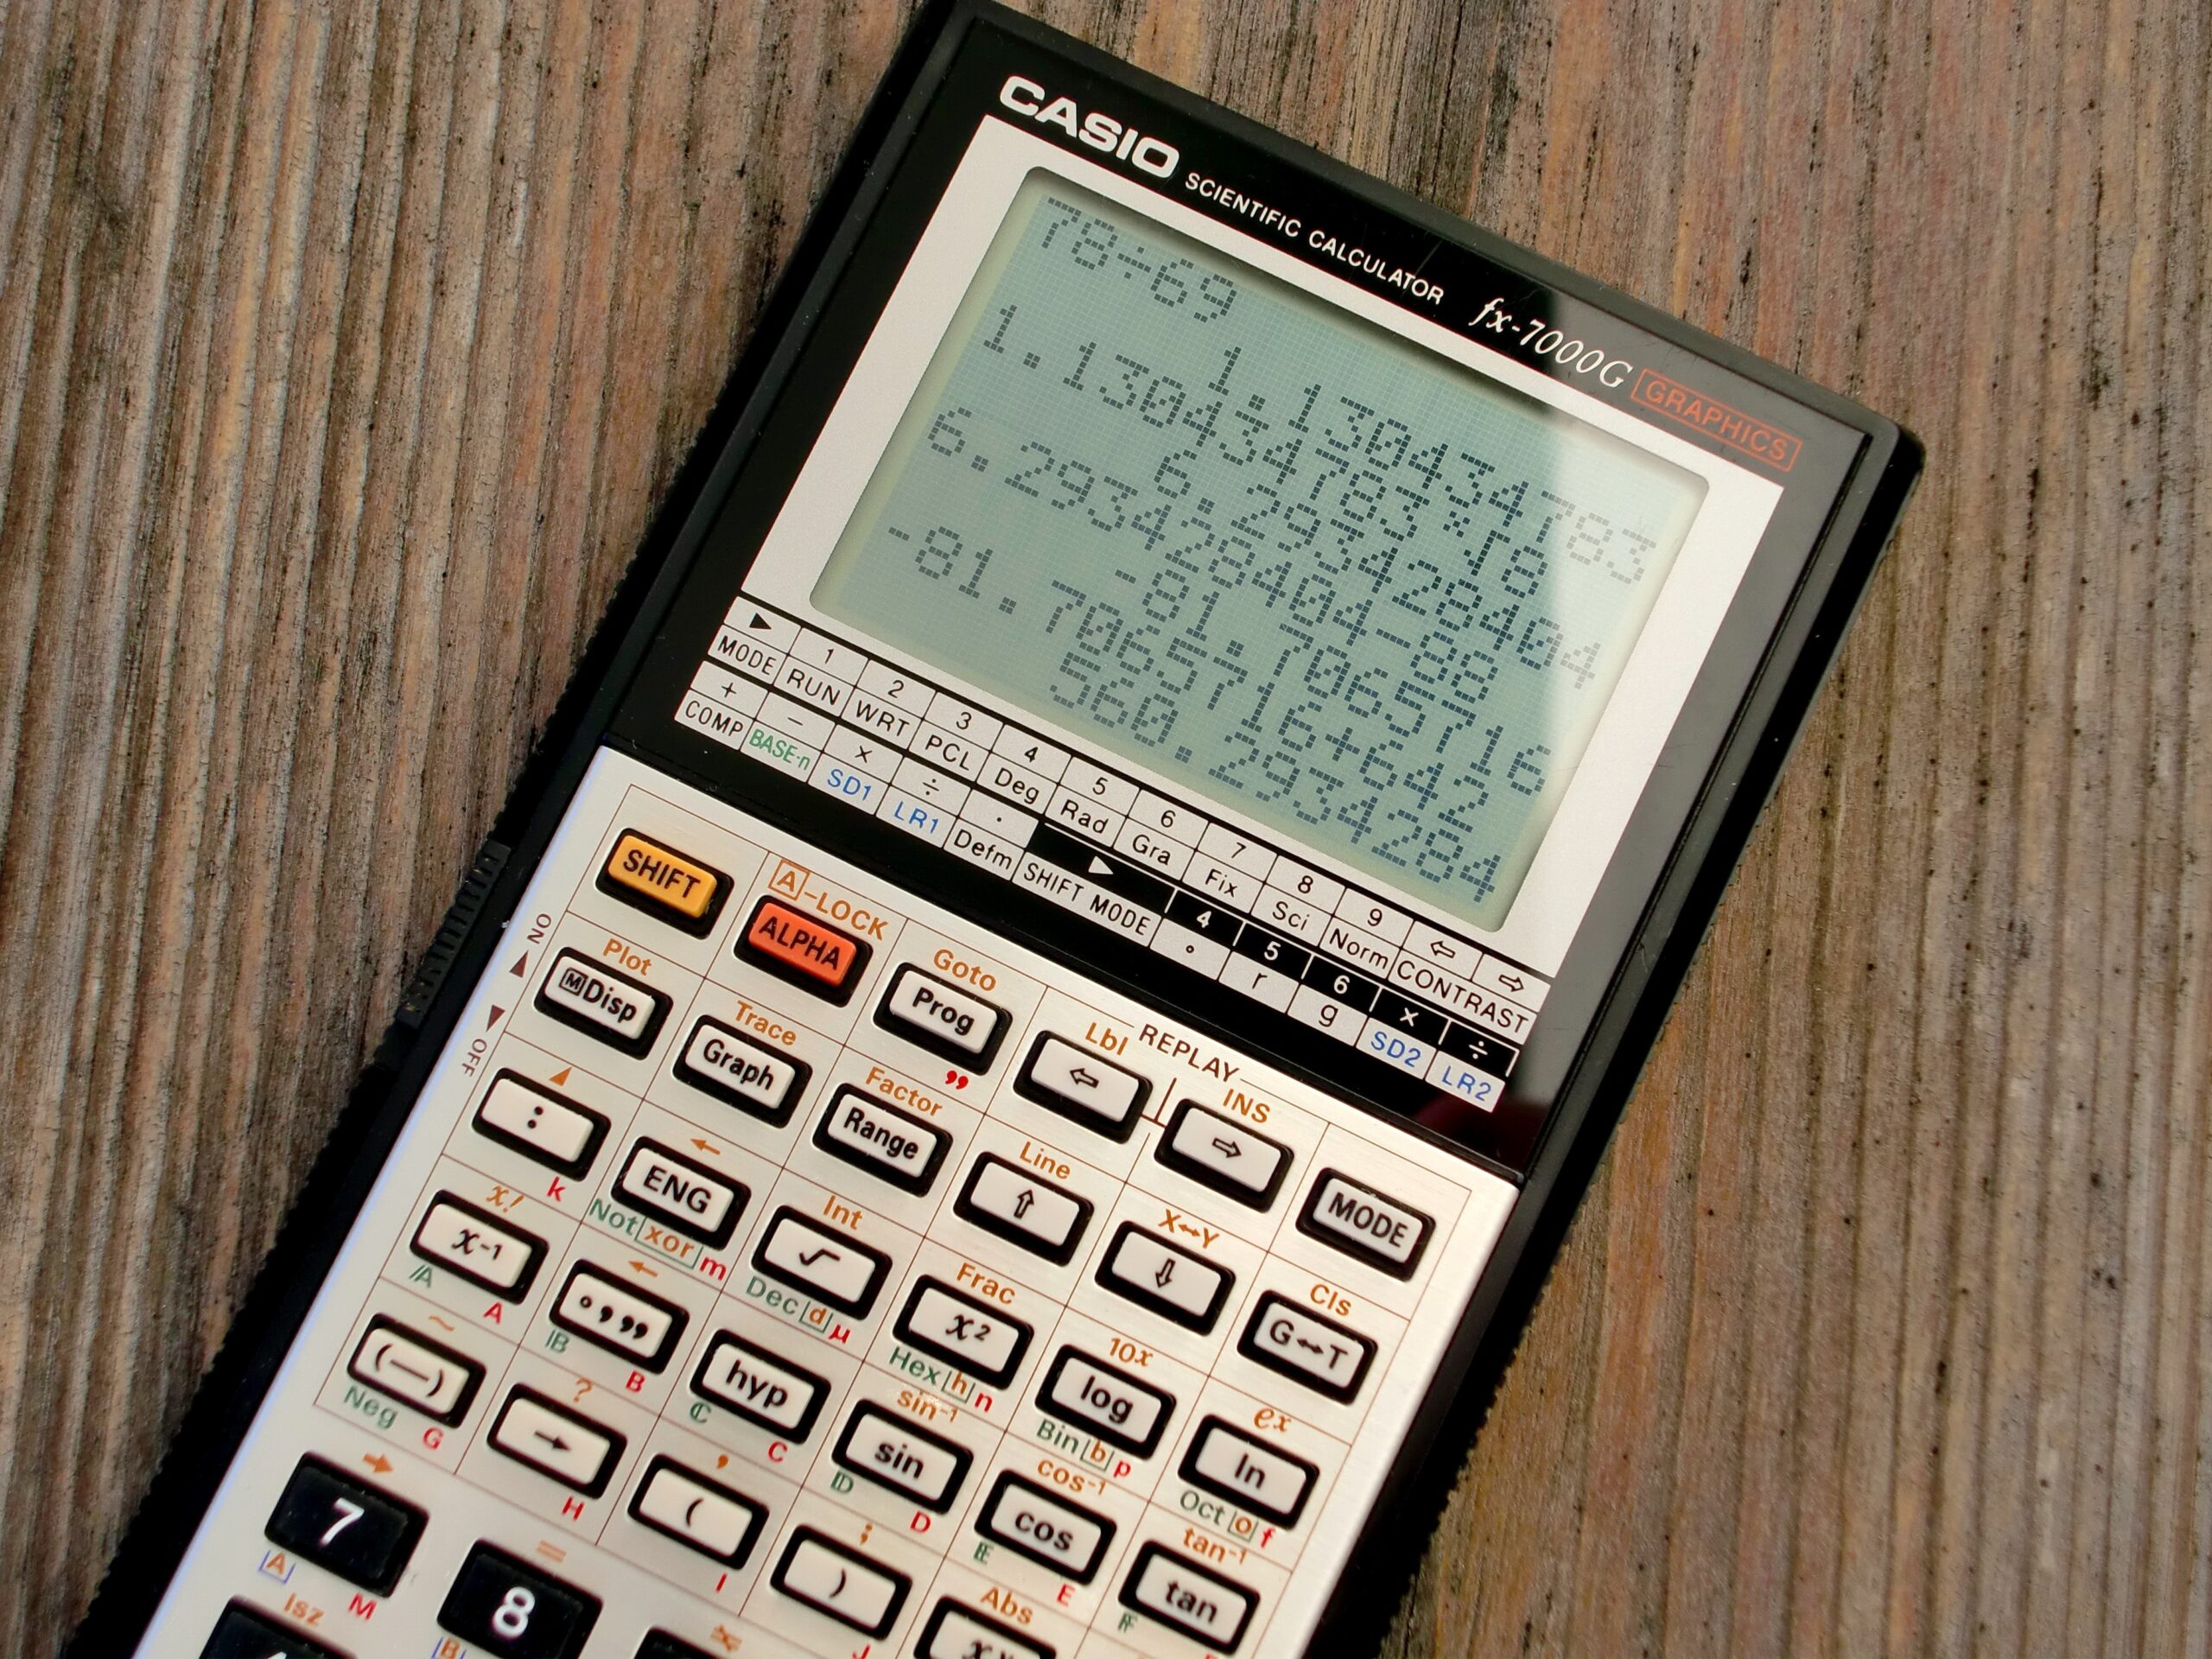 PPP Calculator